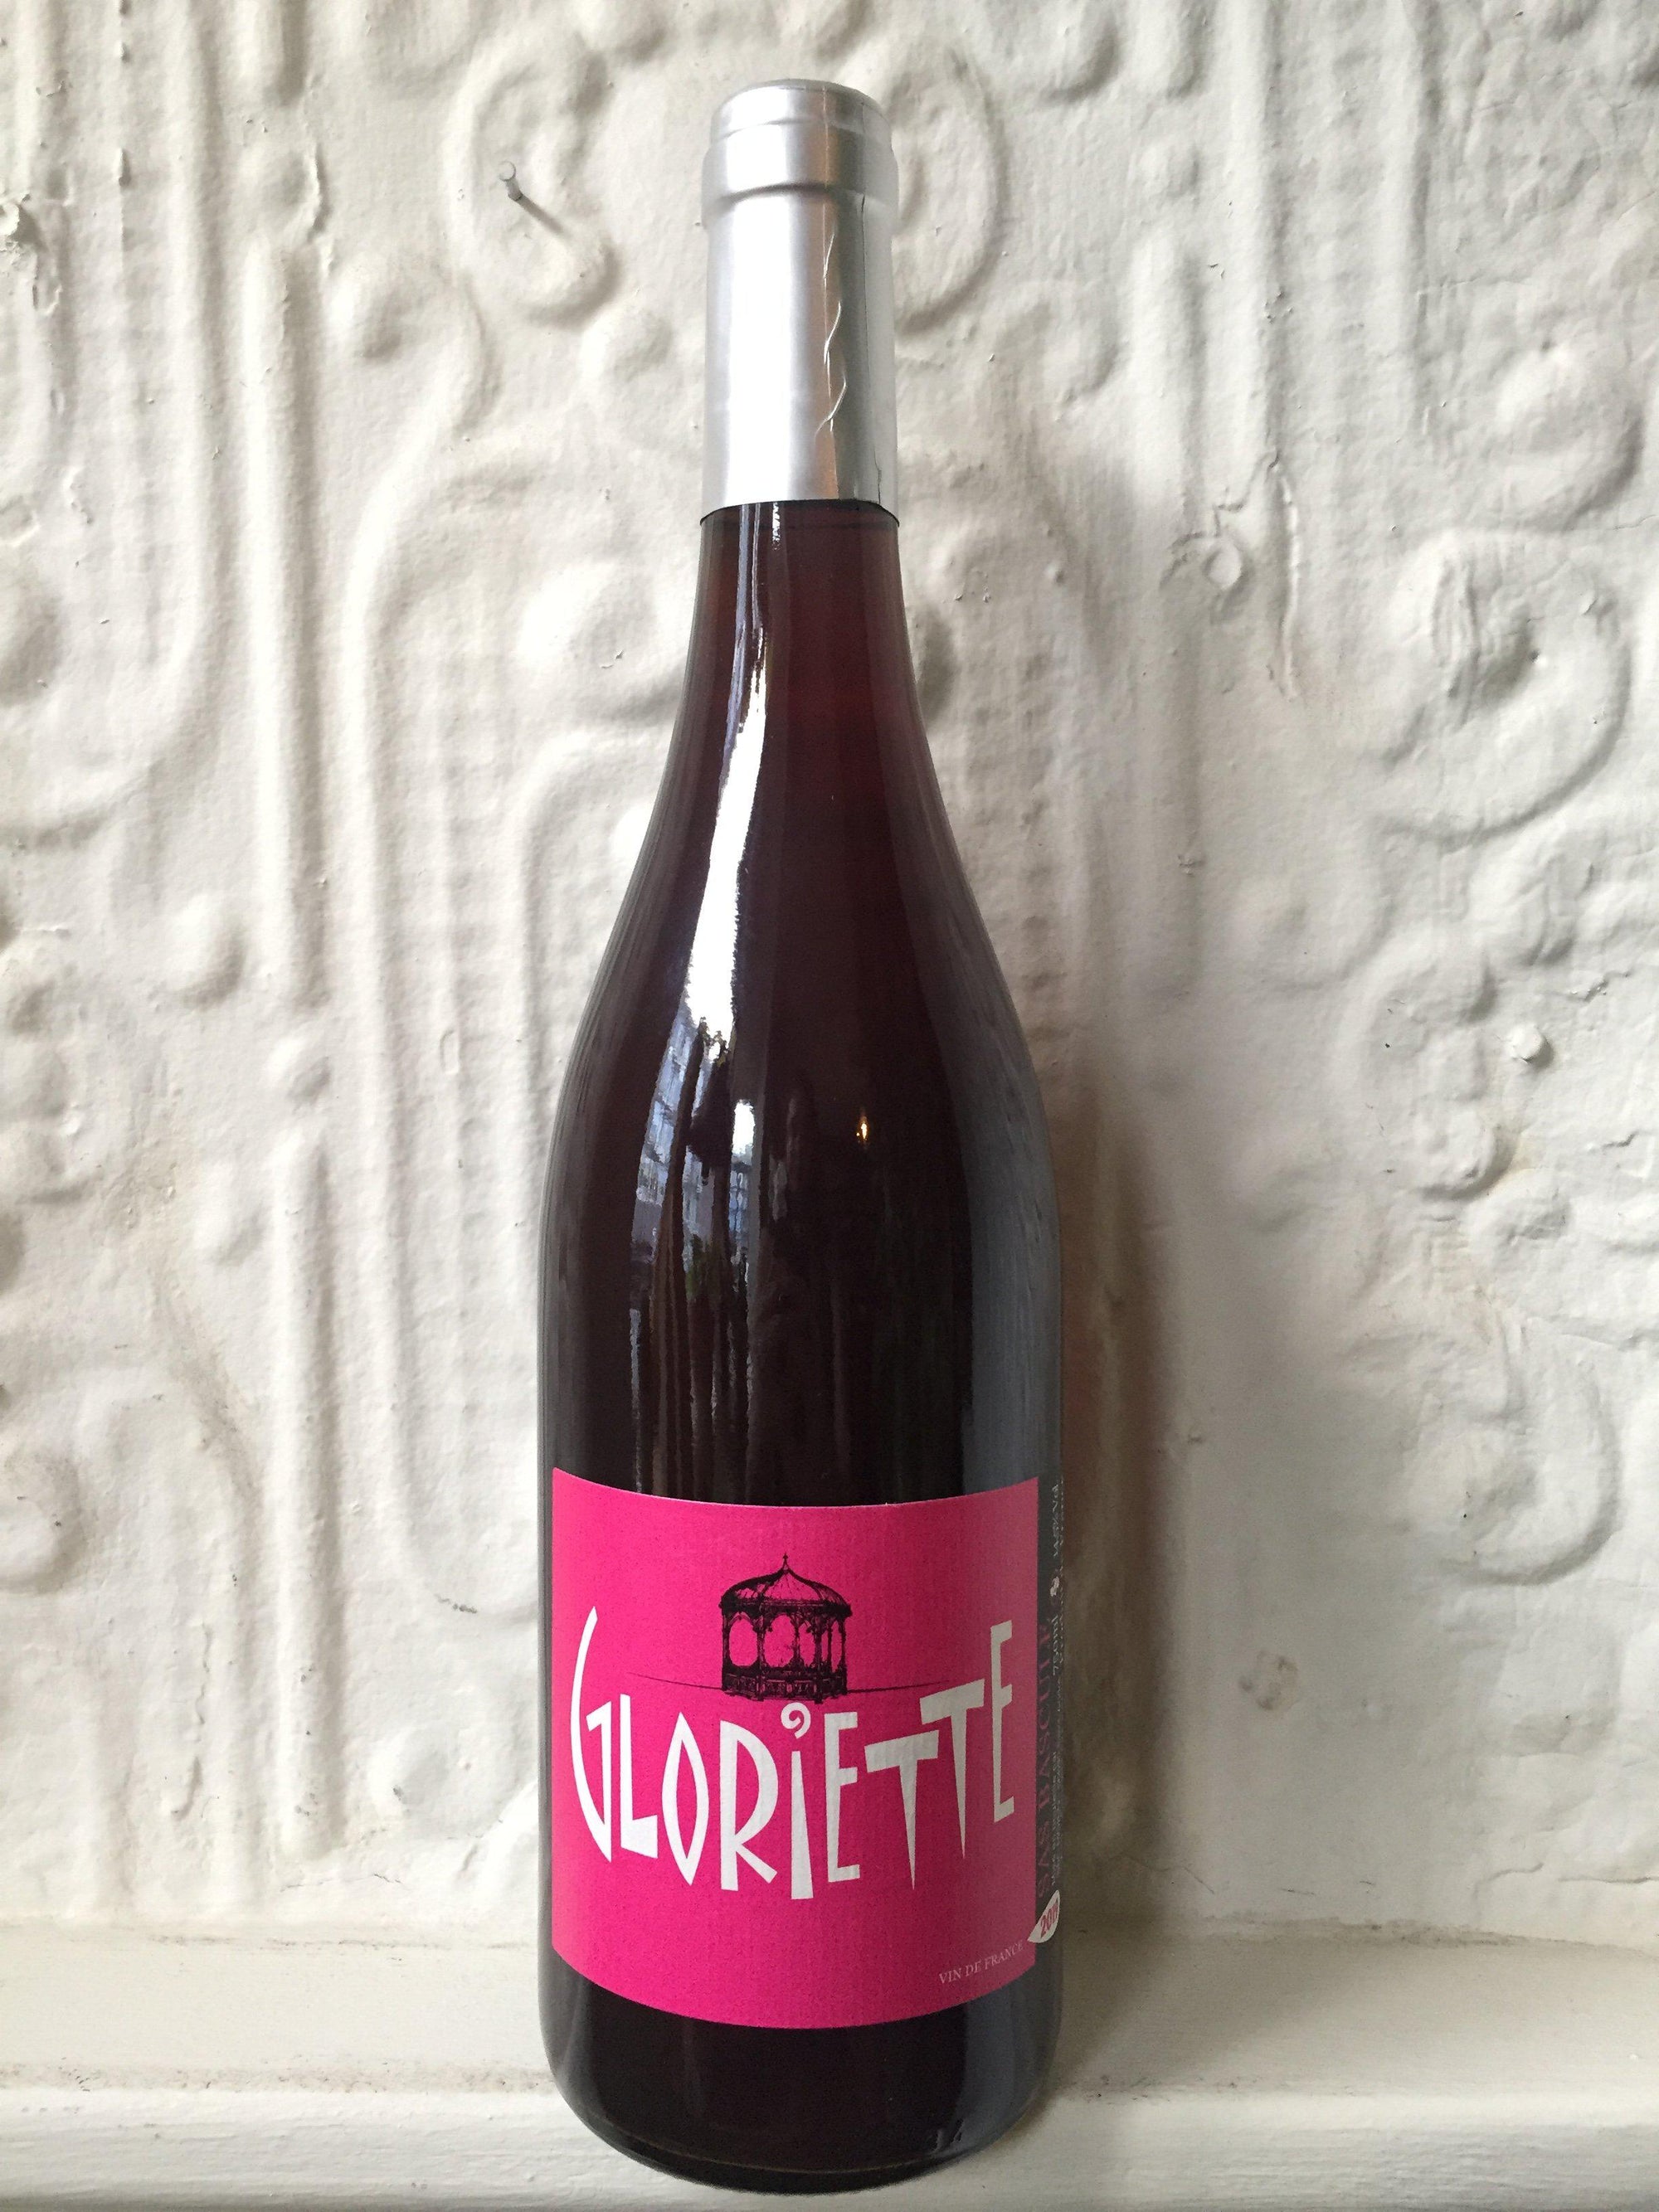 Gloriette, Bascule 2019 (Languedoc, France)-Wine-Bibber & Bell